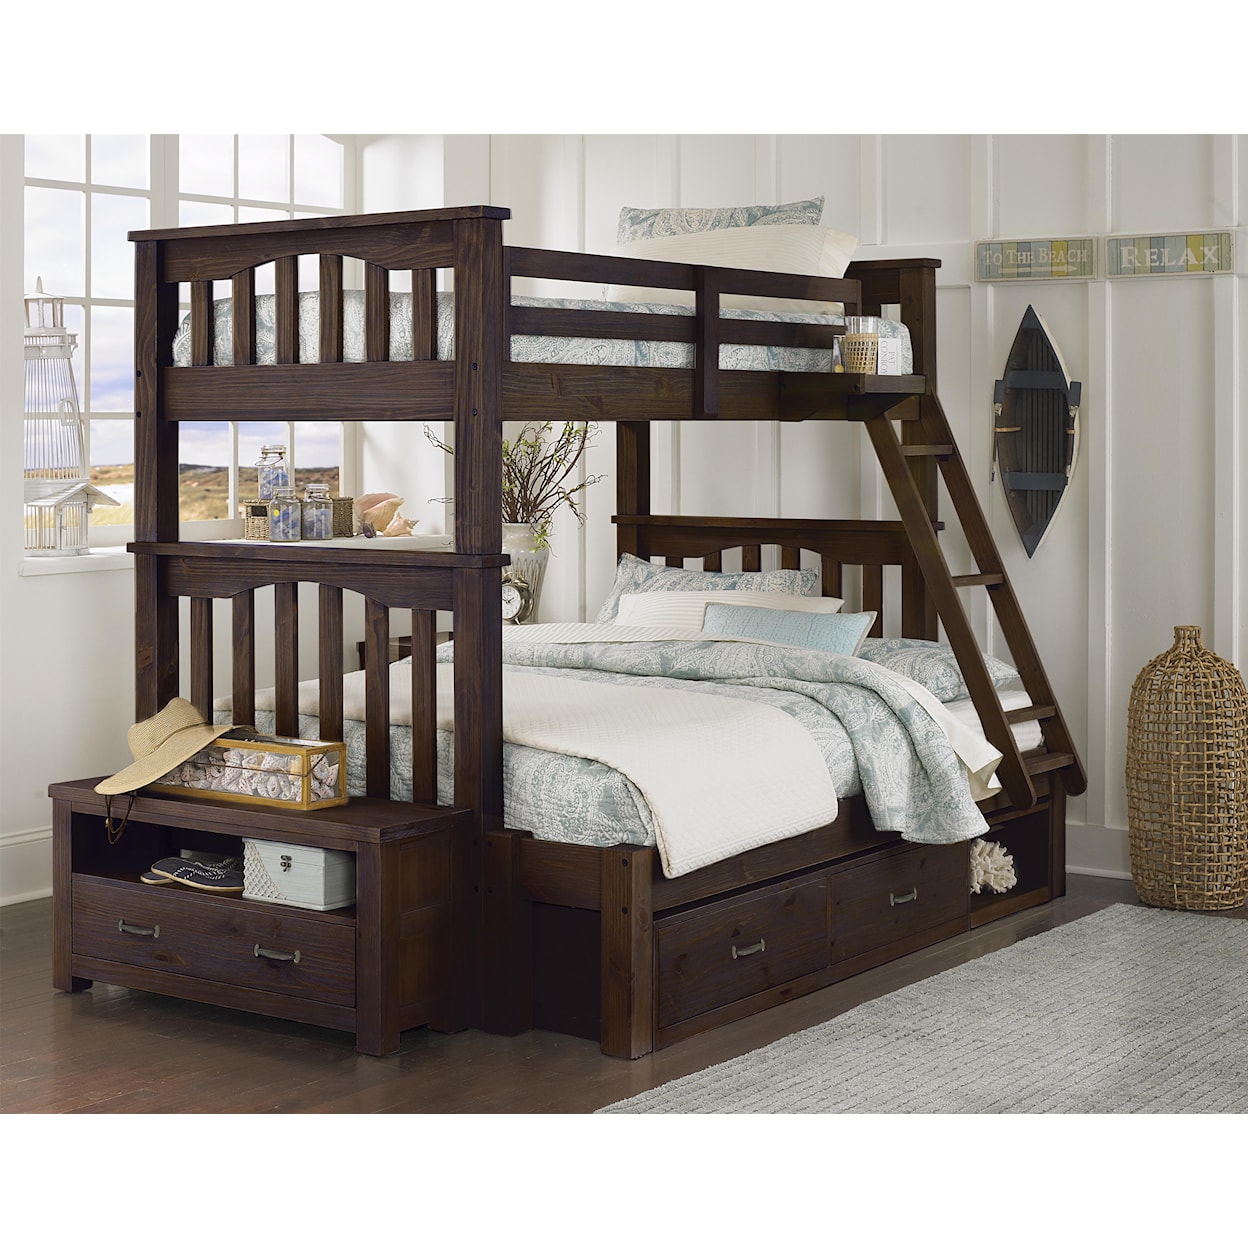 NE Kids Highlands Twin Over Full Harper Bunk Bed with Storage